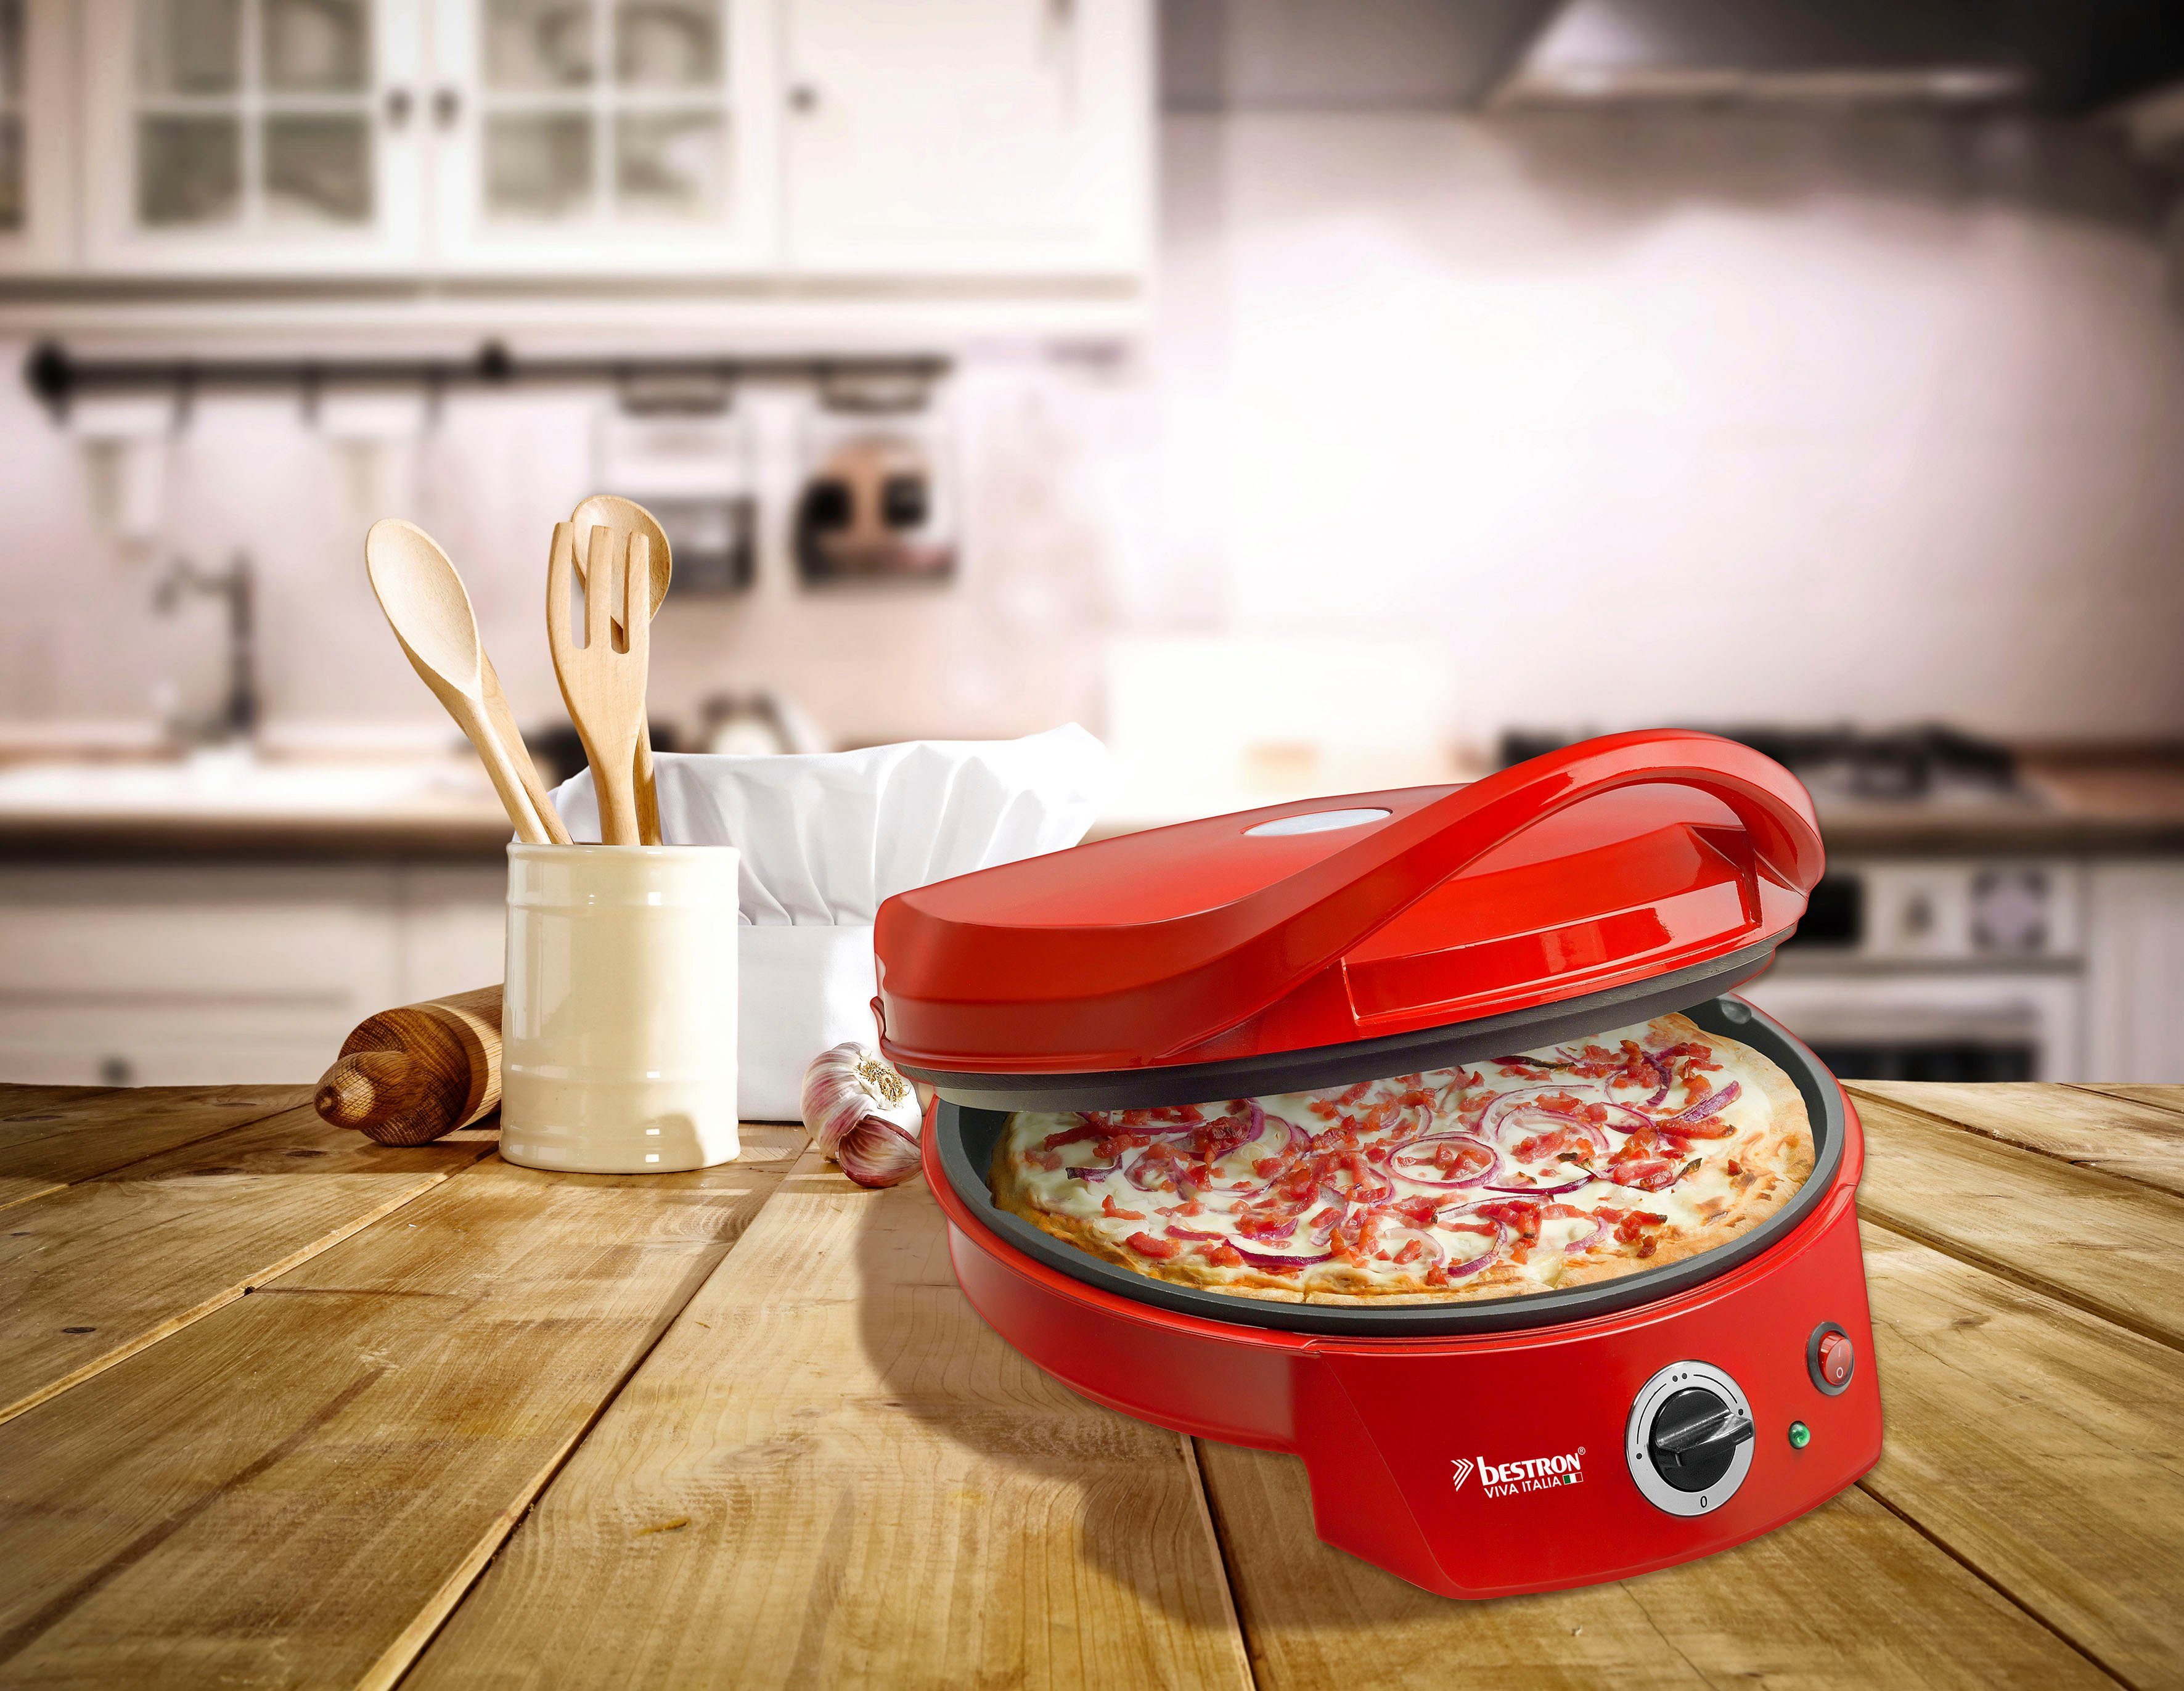 1800 Rot Italia, 180°C, bestron Pizzaofen Bis Watt, max. Viva Ober-/Unterhitze, APZ400